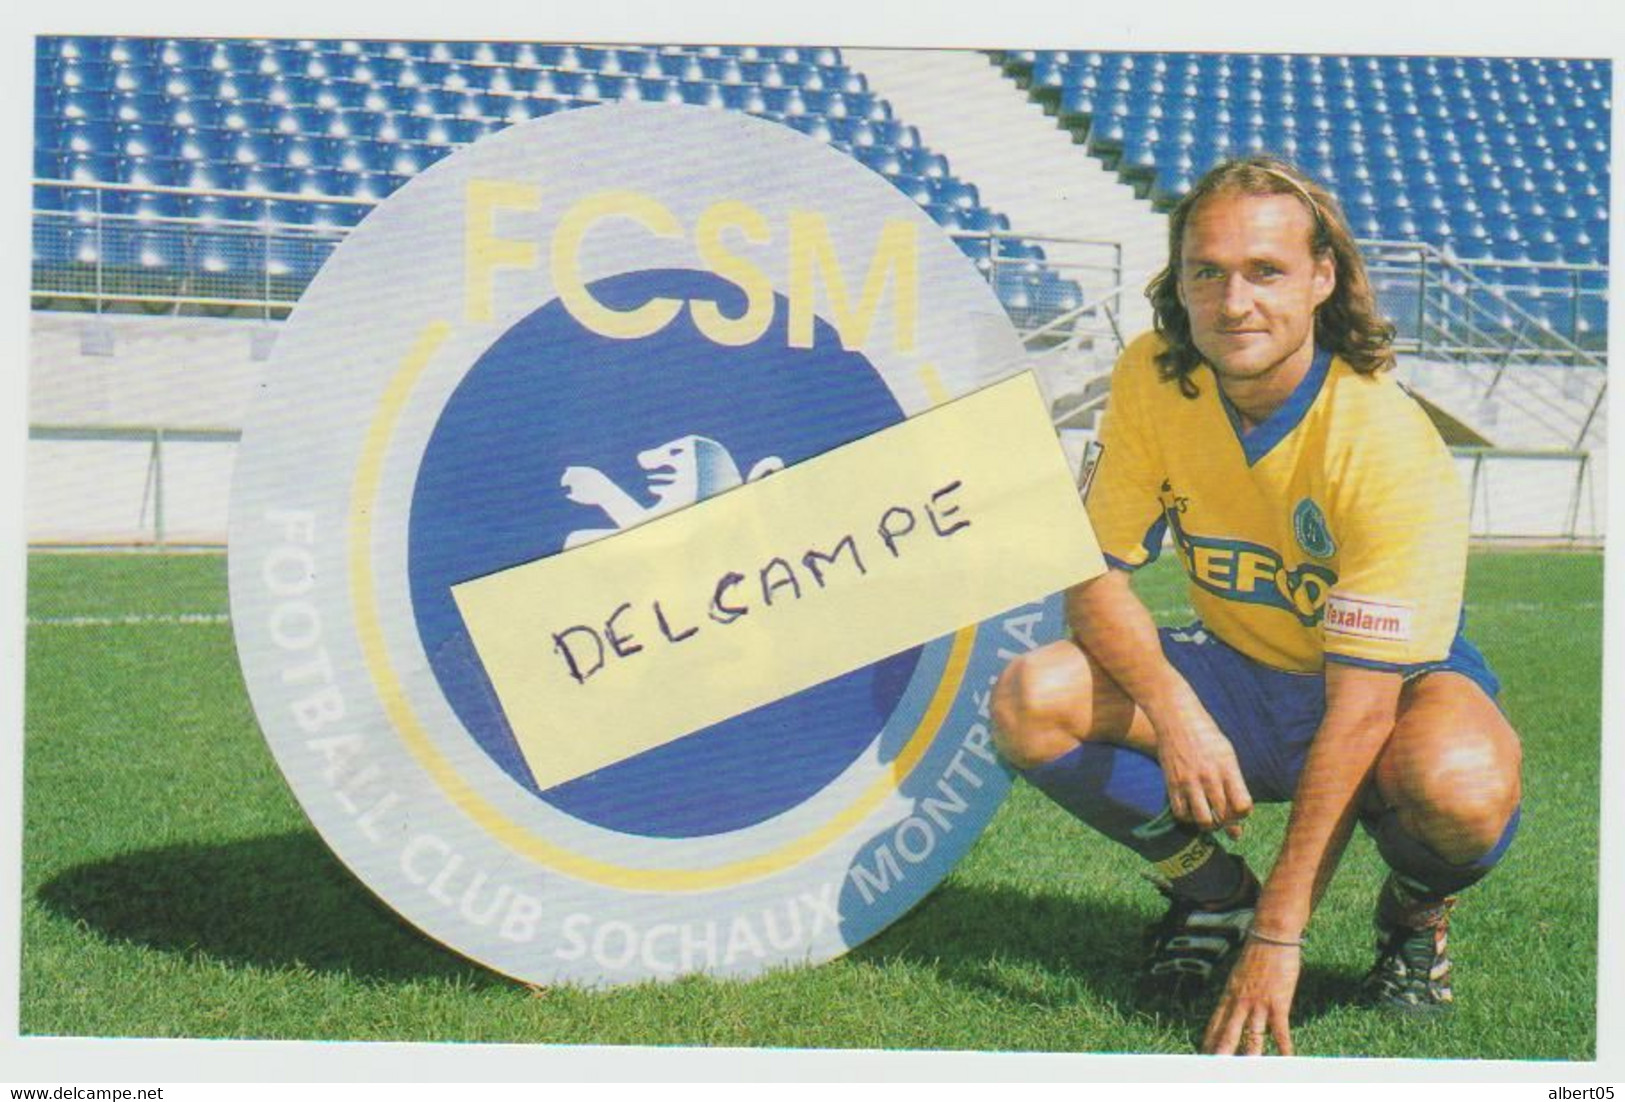 Equipe de Foot-Ball FC Sochaux Montbéliard - Saison 1999-2000 - Joueurs et Staff - Sport